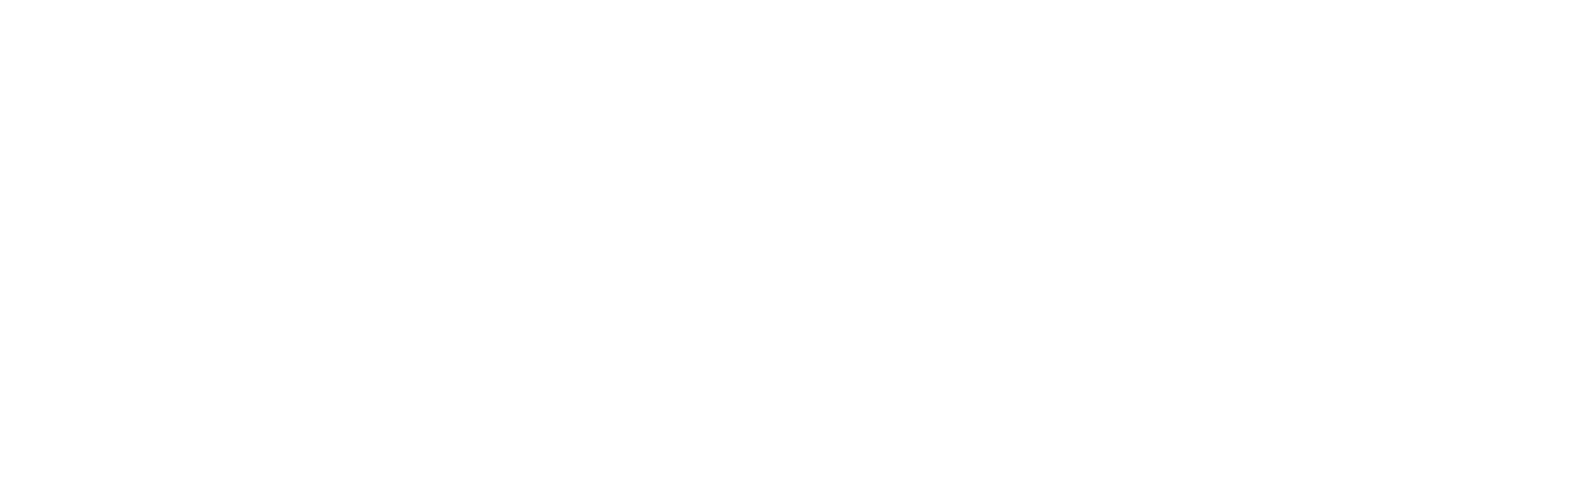 Dassault Systèmes Logo groß für dunkle Hintergründe (transparentes PNG)